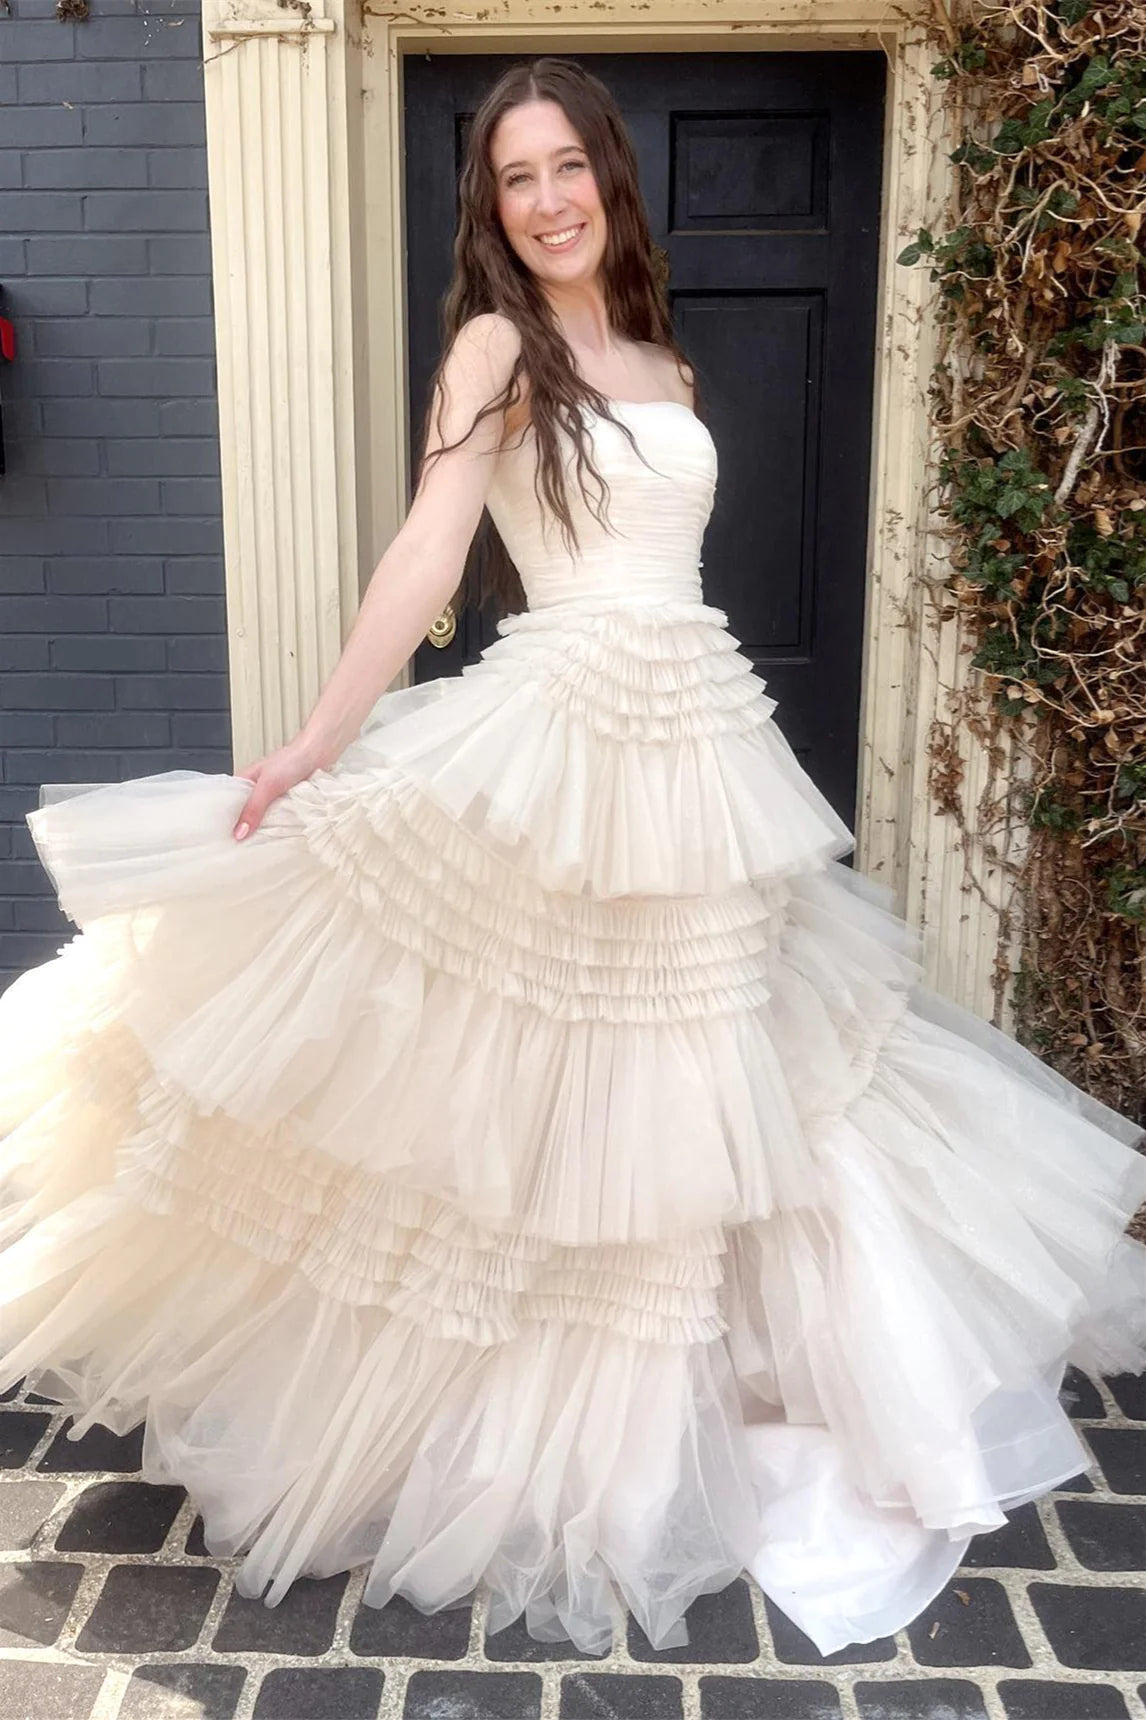 Fuchsia Sleeveless Pleated Evening Prom Dress